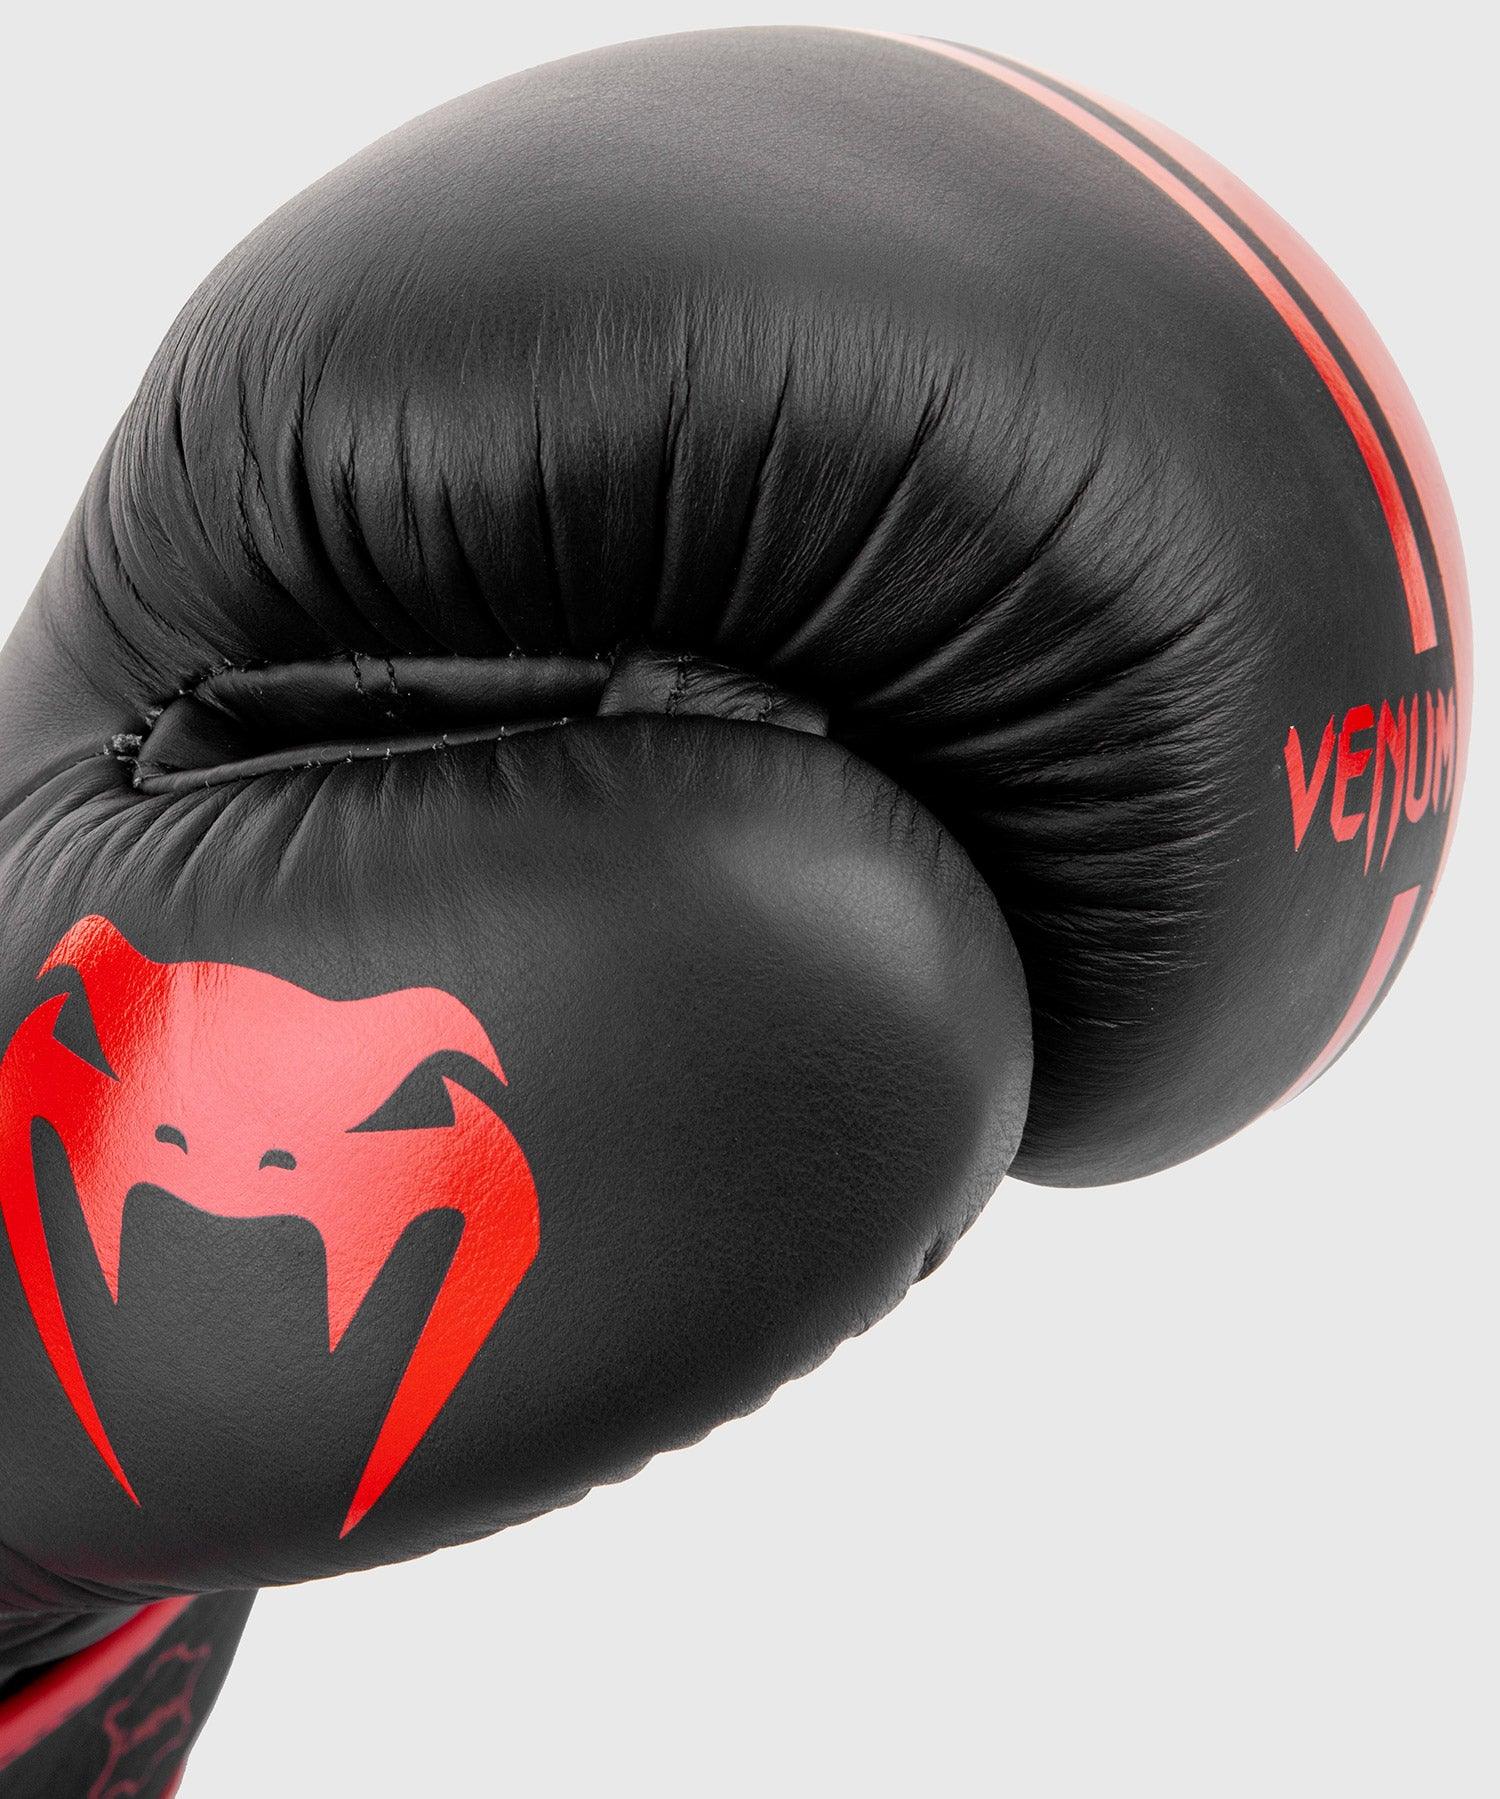 Venum Shield Pro Boxing Gloves Velcro - Black/Red Picture 4